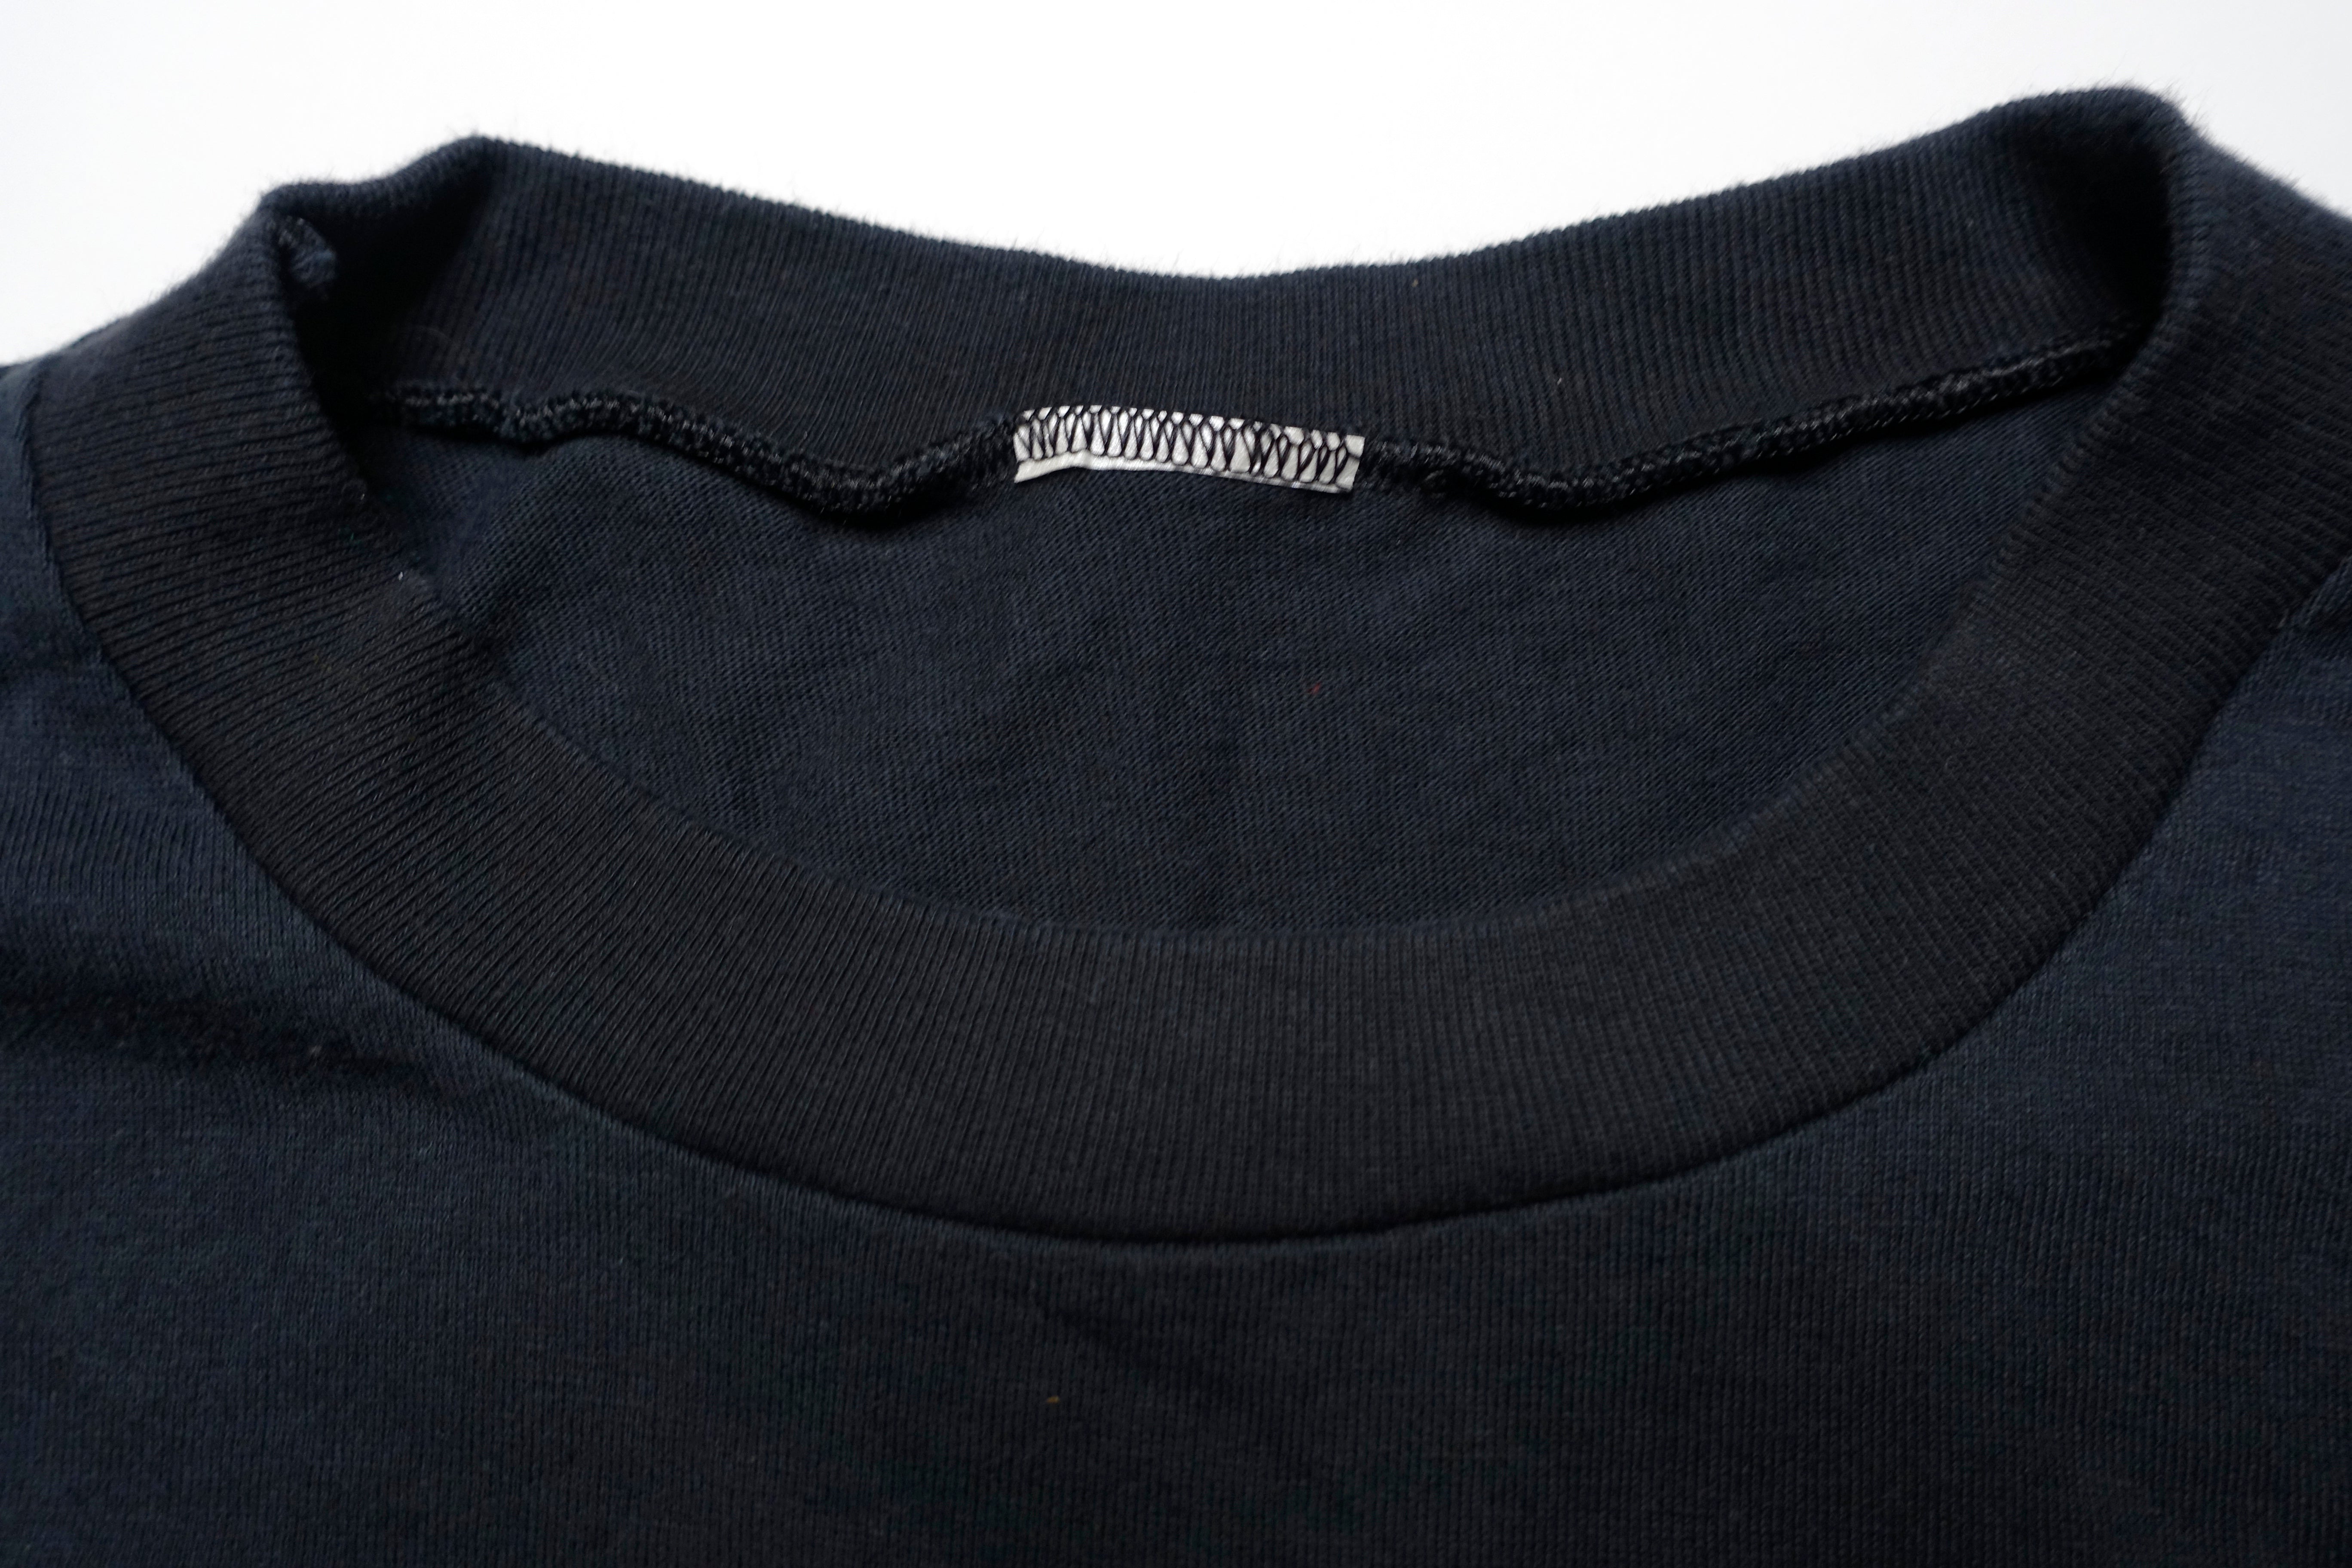 Hard-Ons - Too Far Gone Australian 1993 Tour Long Sleeve Shirt Size XL (Black)